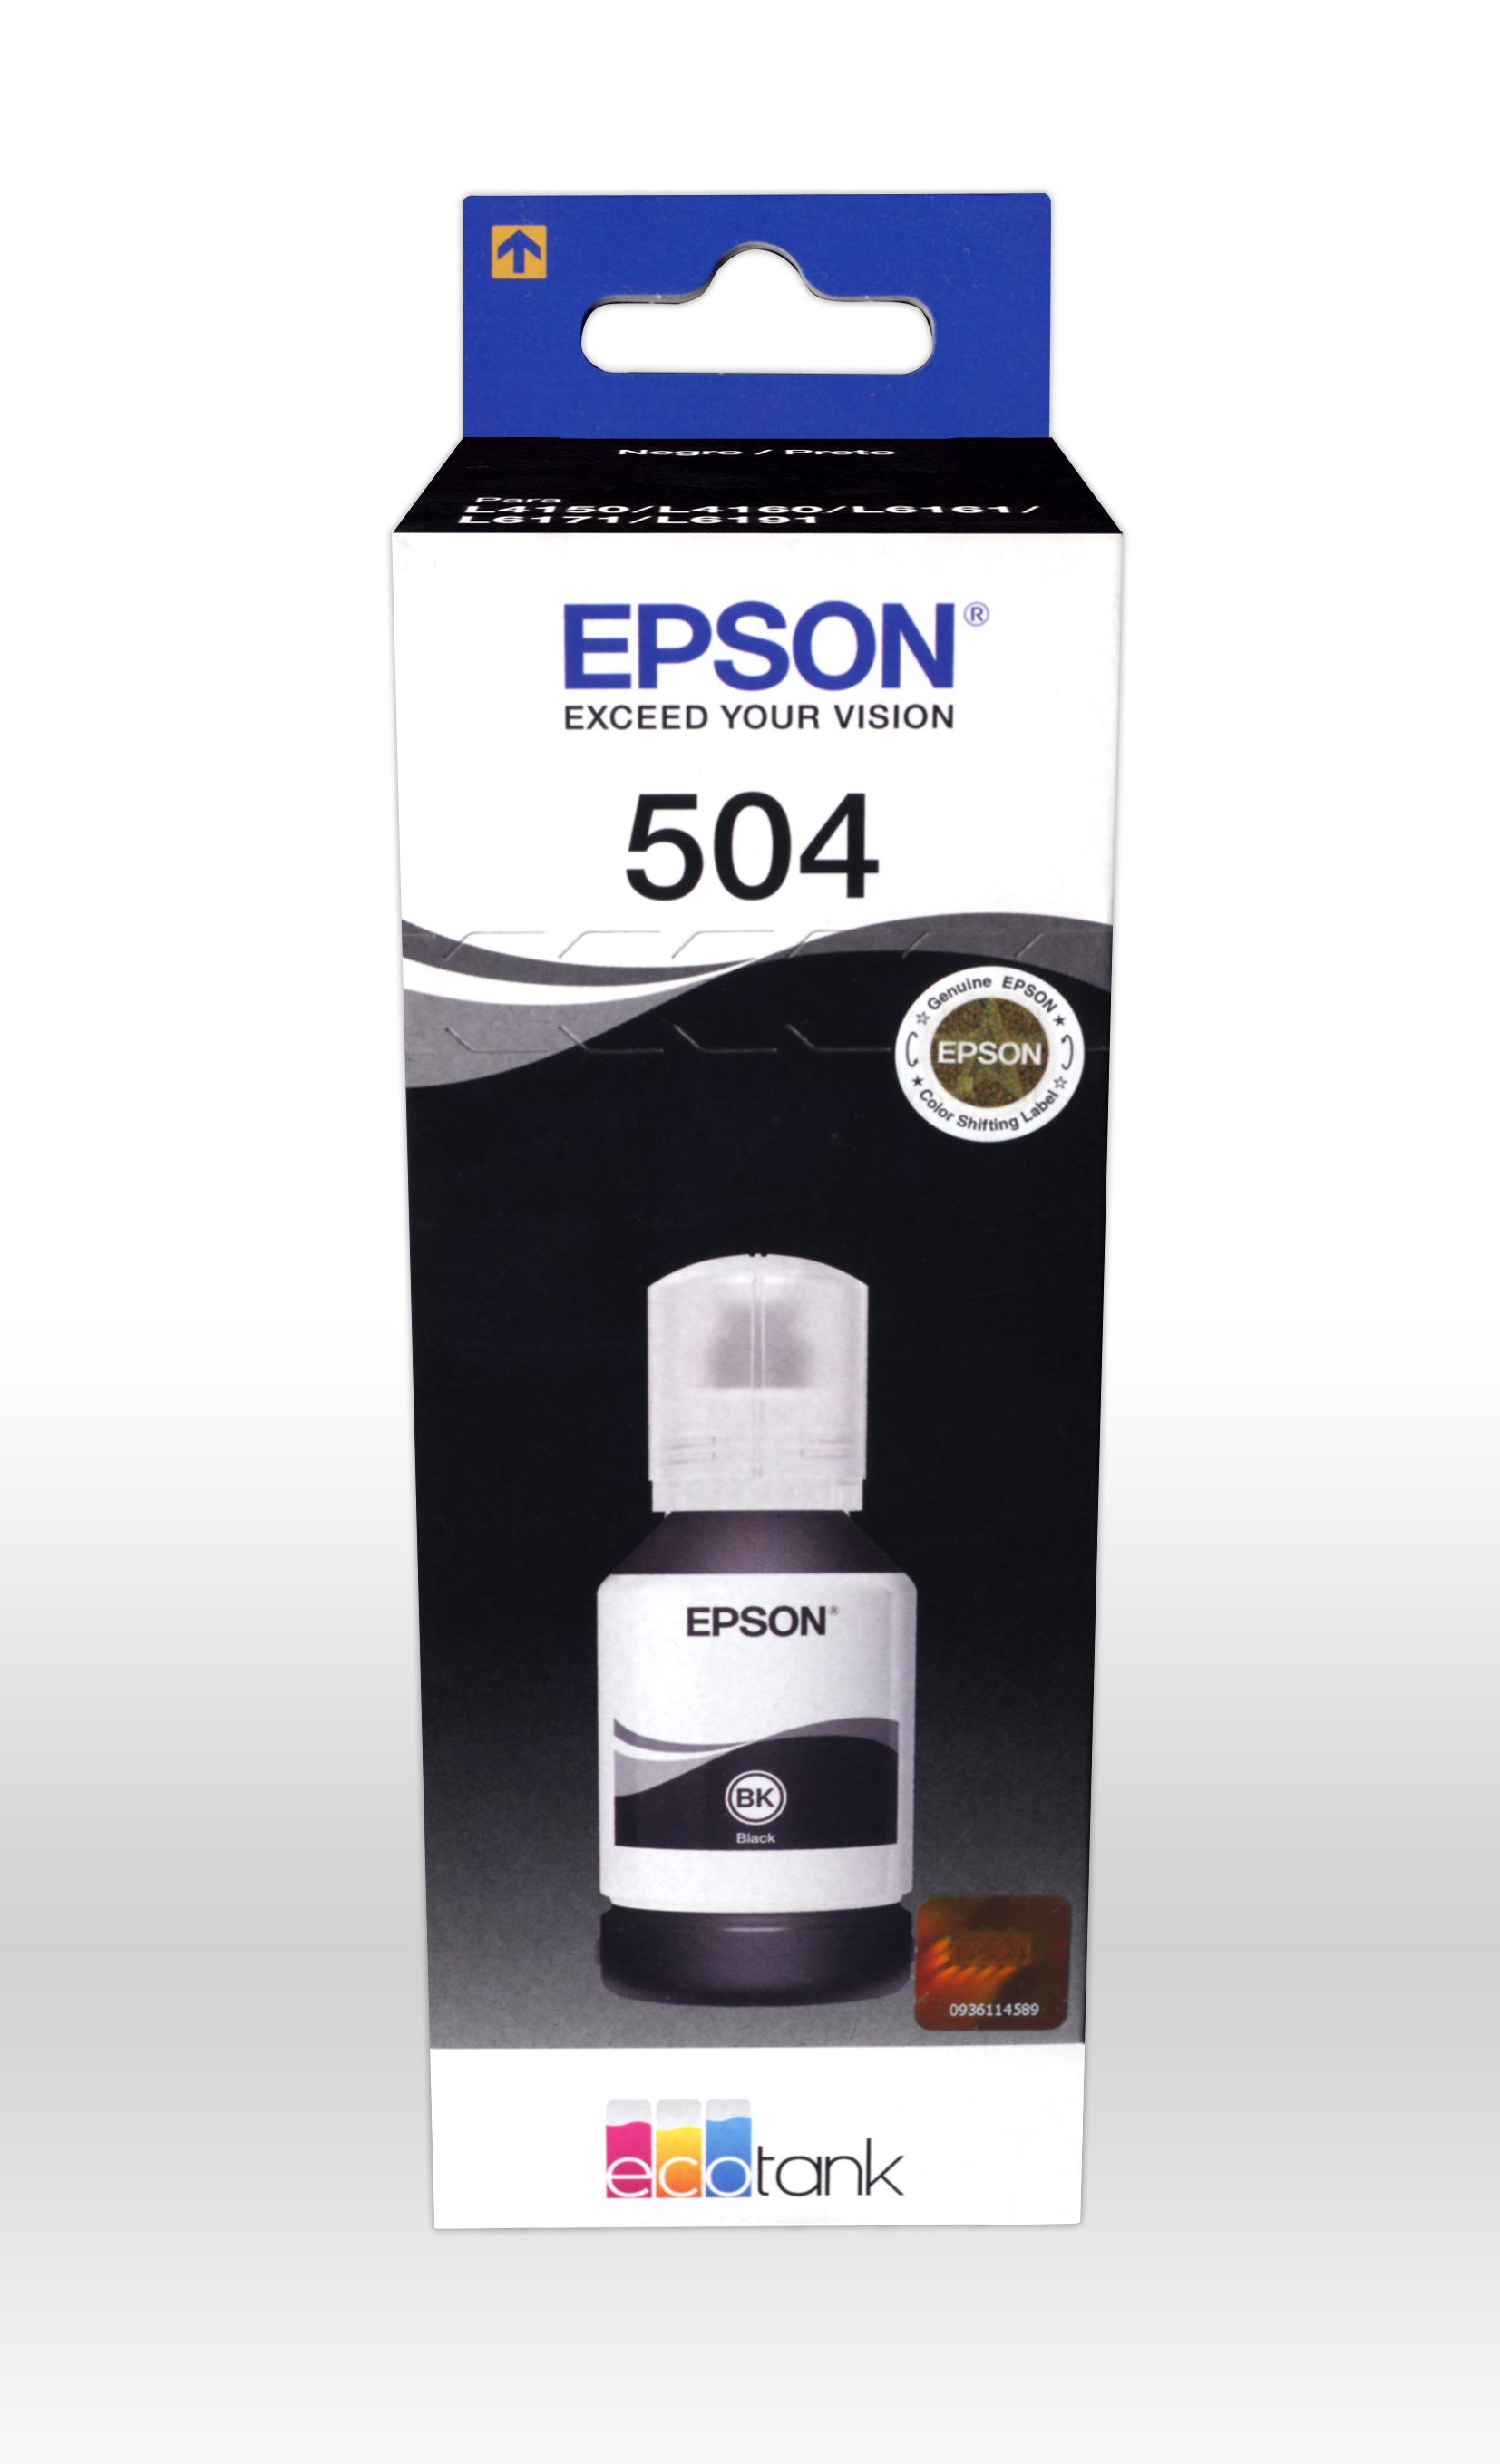 Botella Tinta Epson T504 Negro T504120-AL - T504120-AL